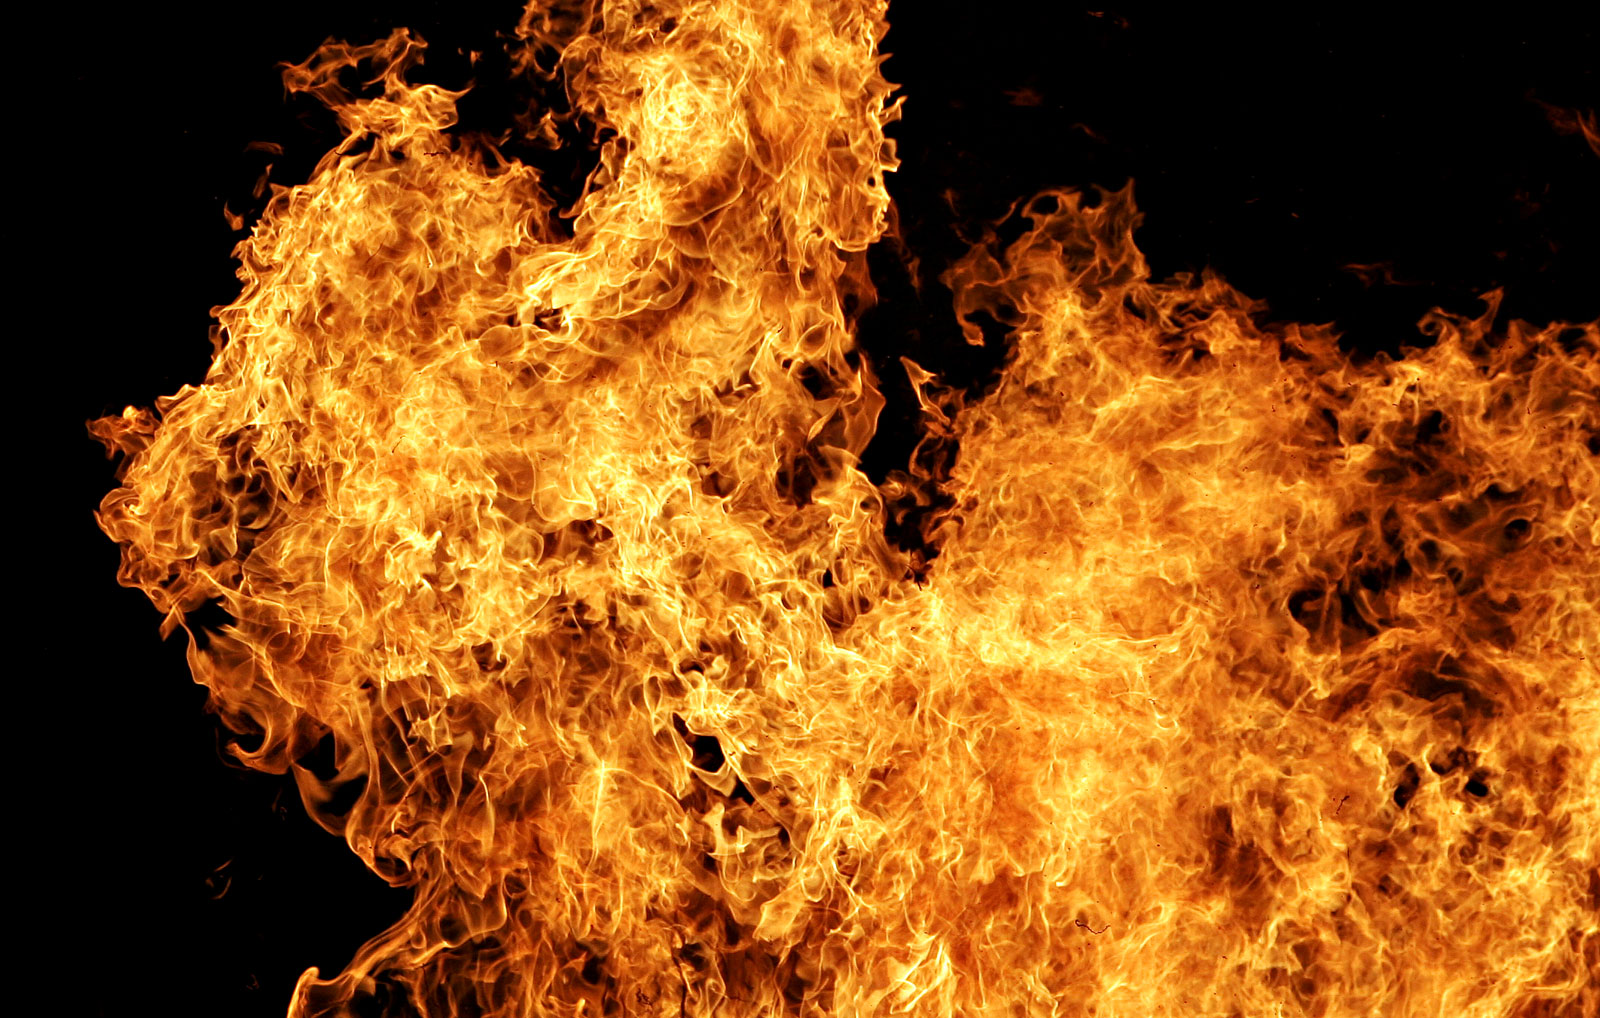 Feuer. CC BY-NC, Fir0002/Flagstaffotos